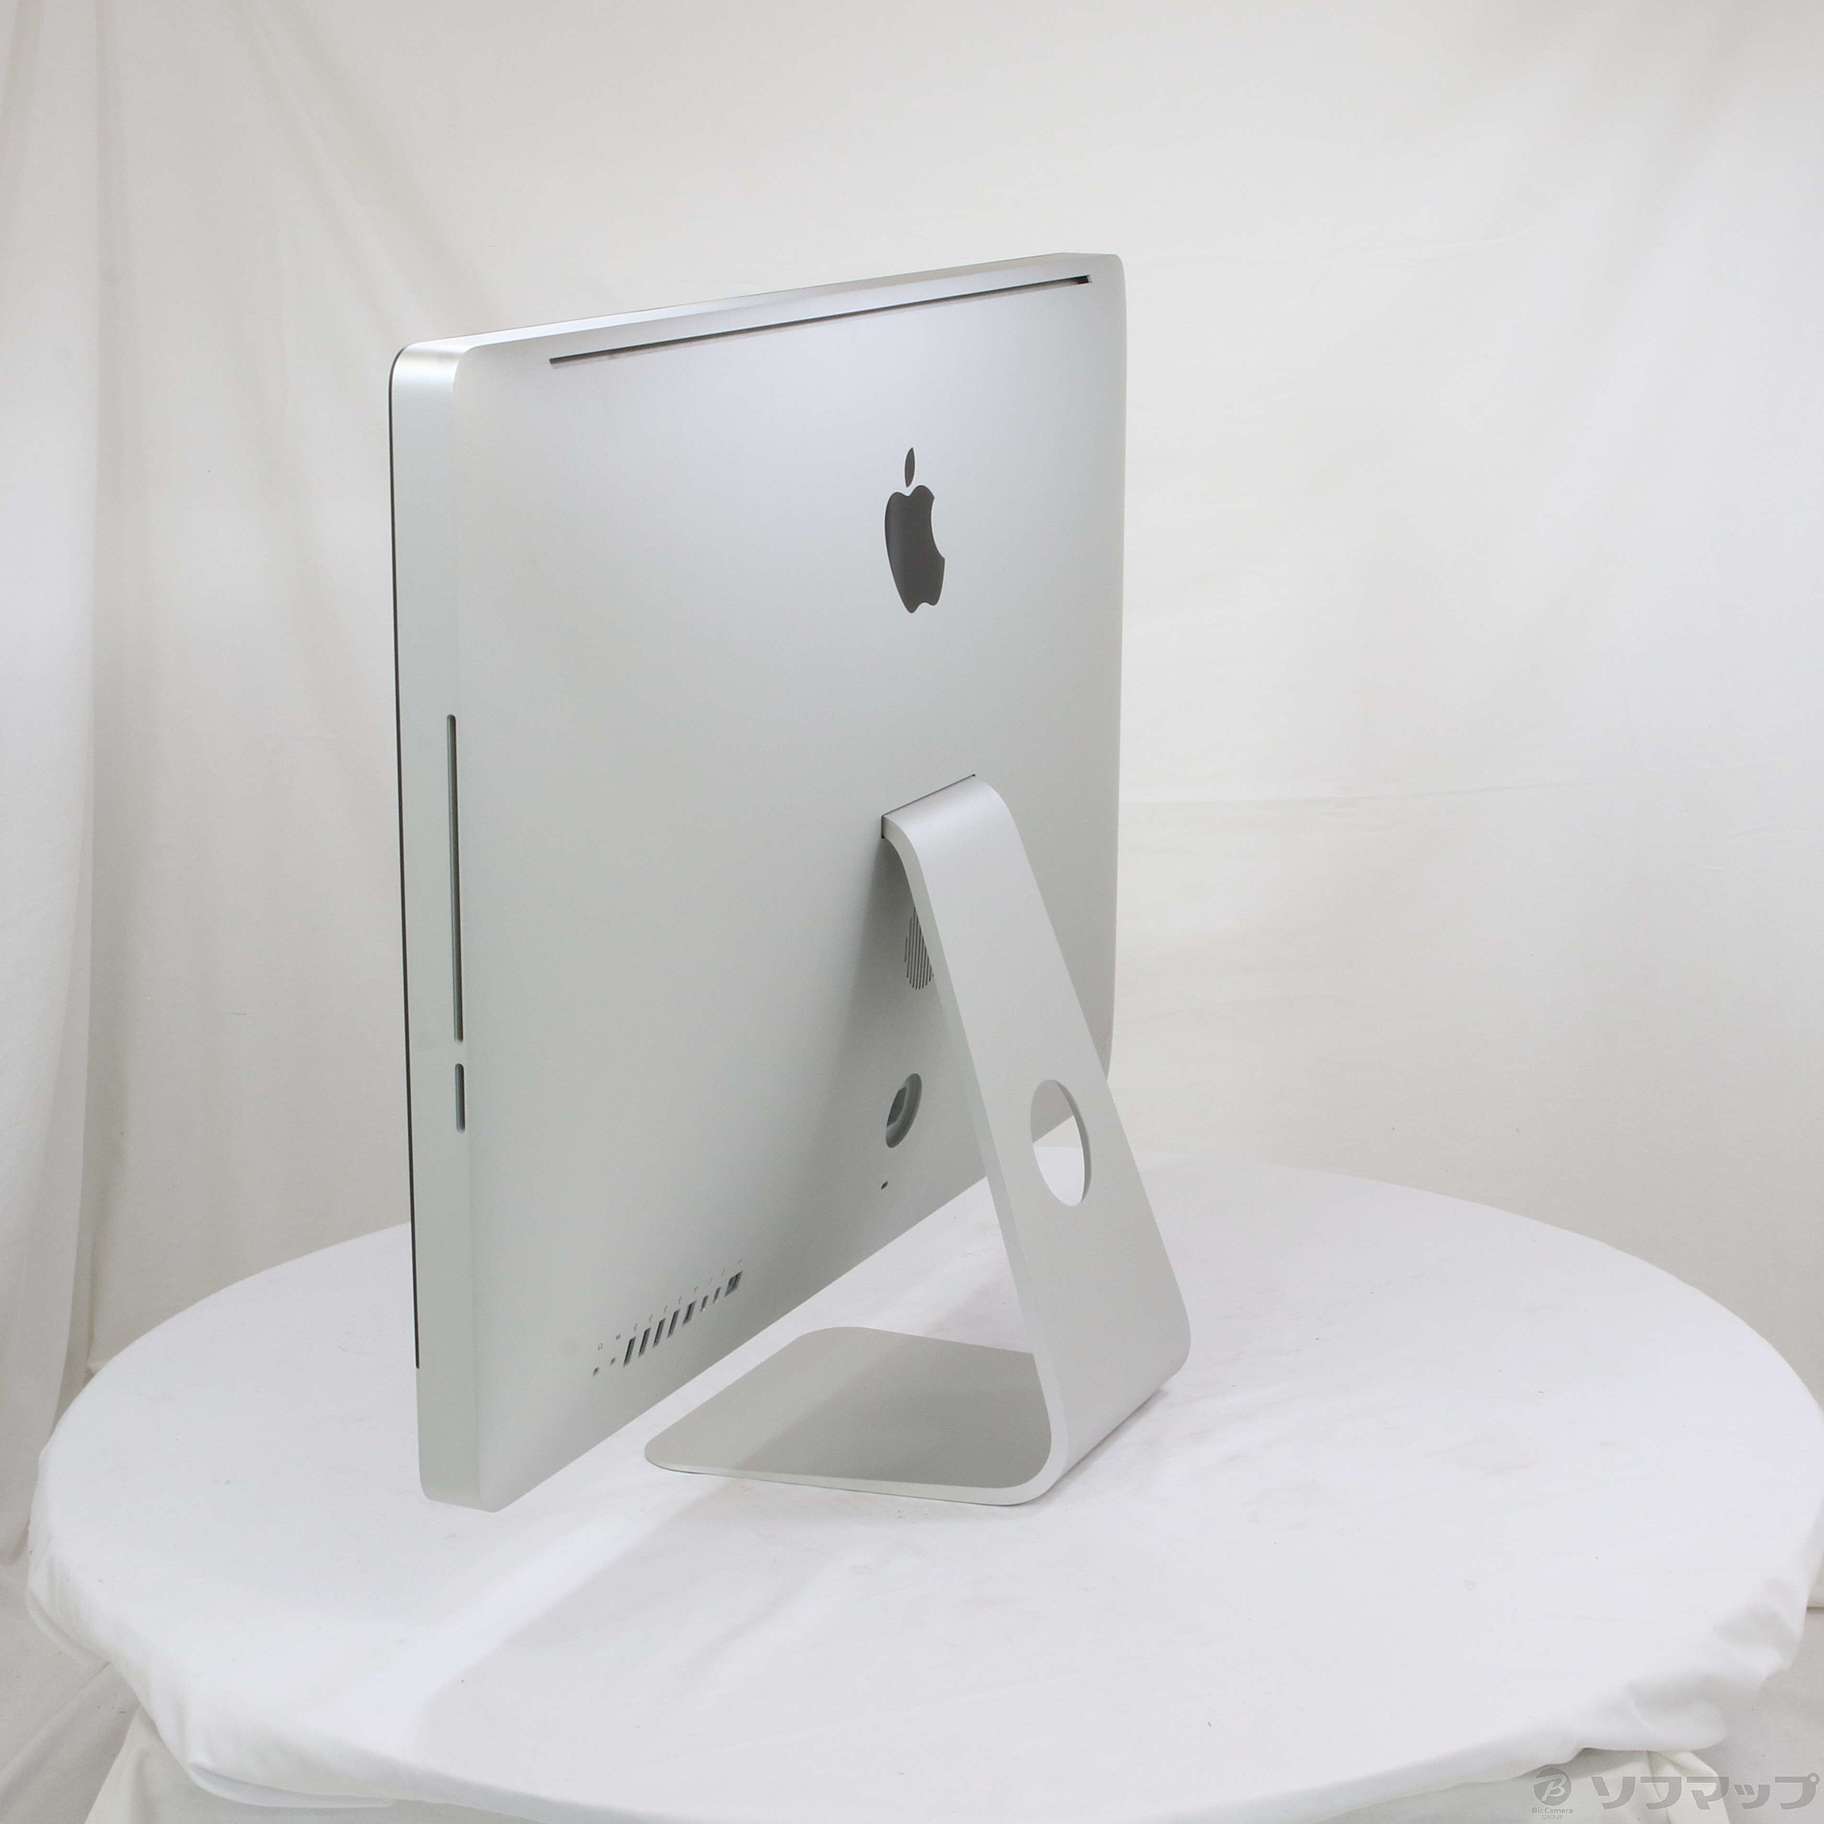 iMac2011モデル 27インチ